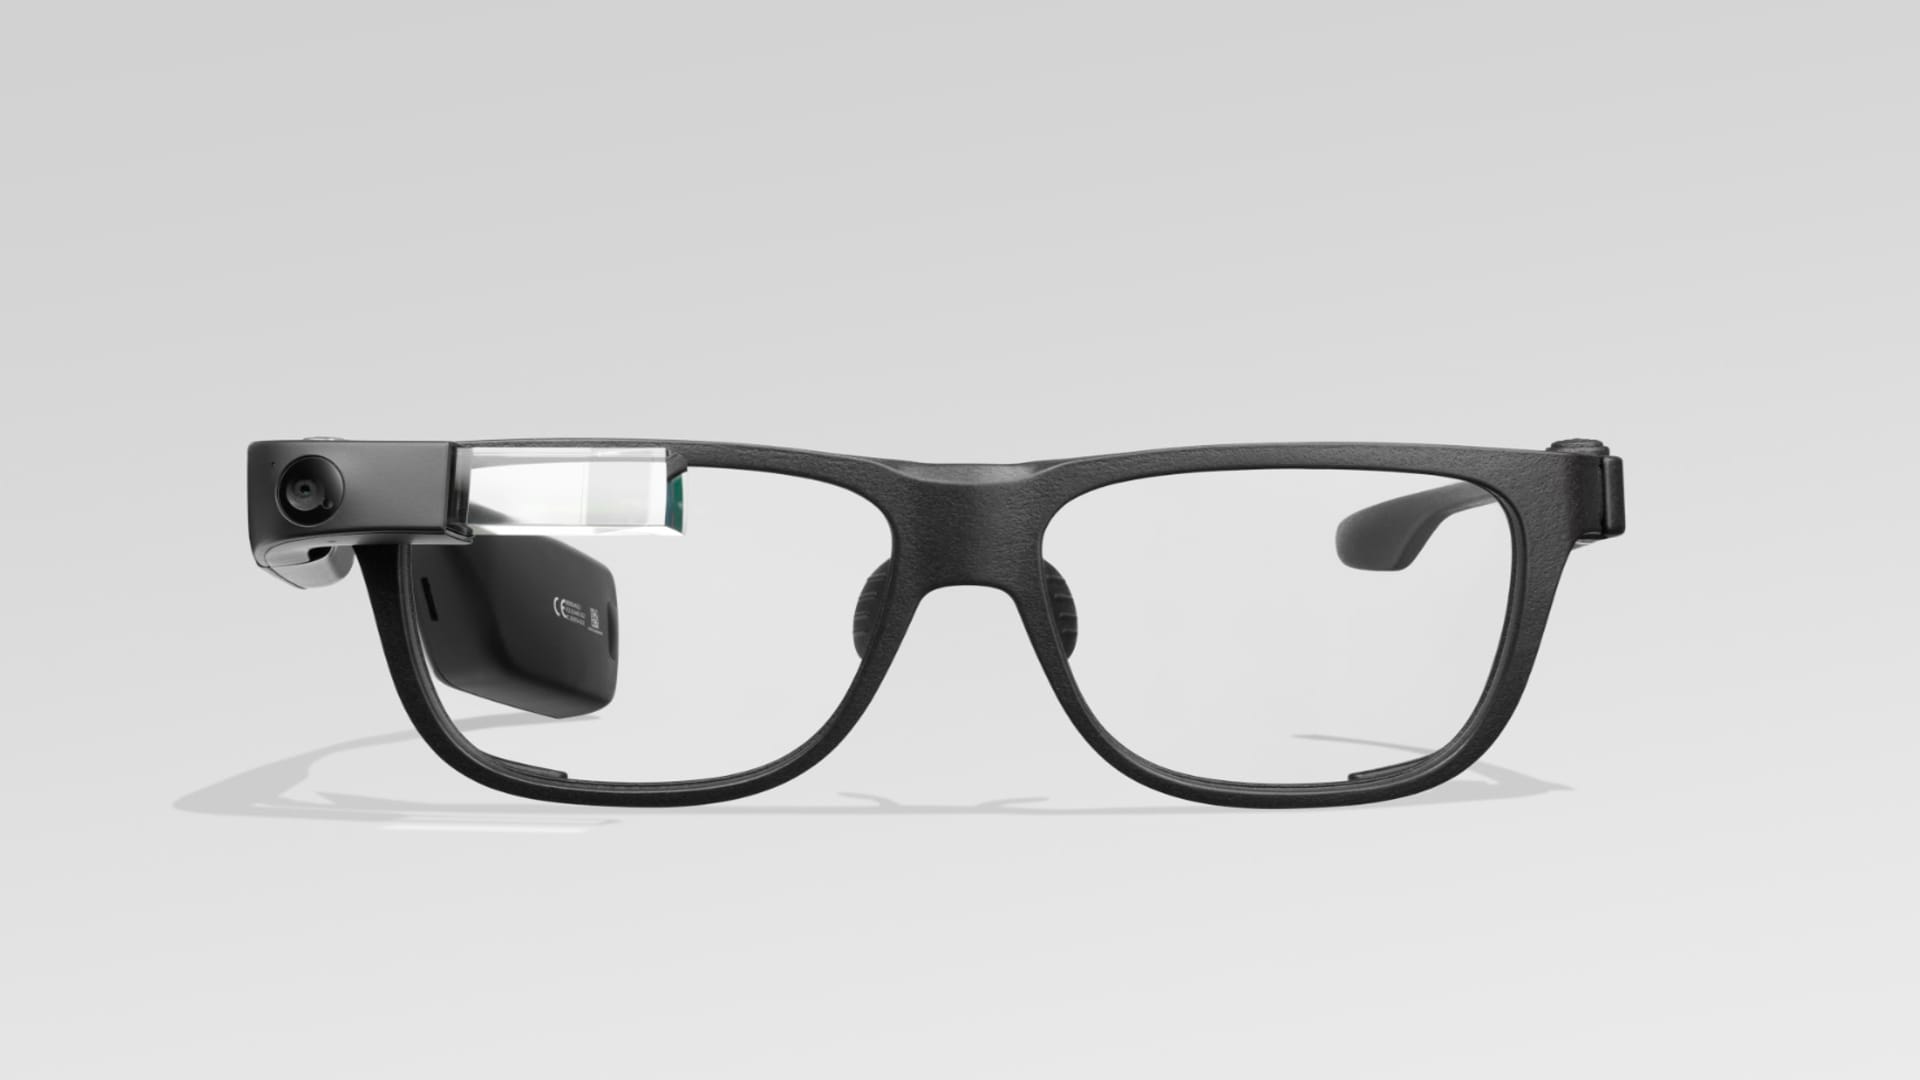 visie neus Bestuiver Google Glass Enterprise Edition 2 announced for $999